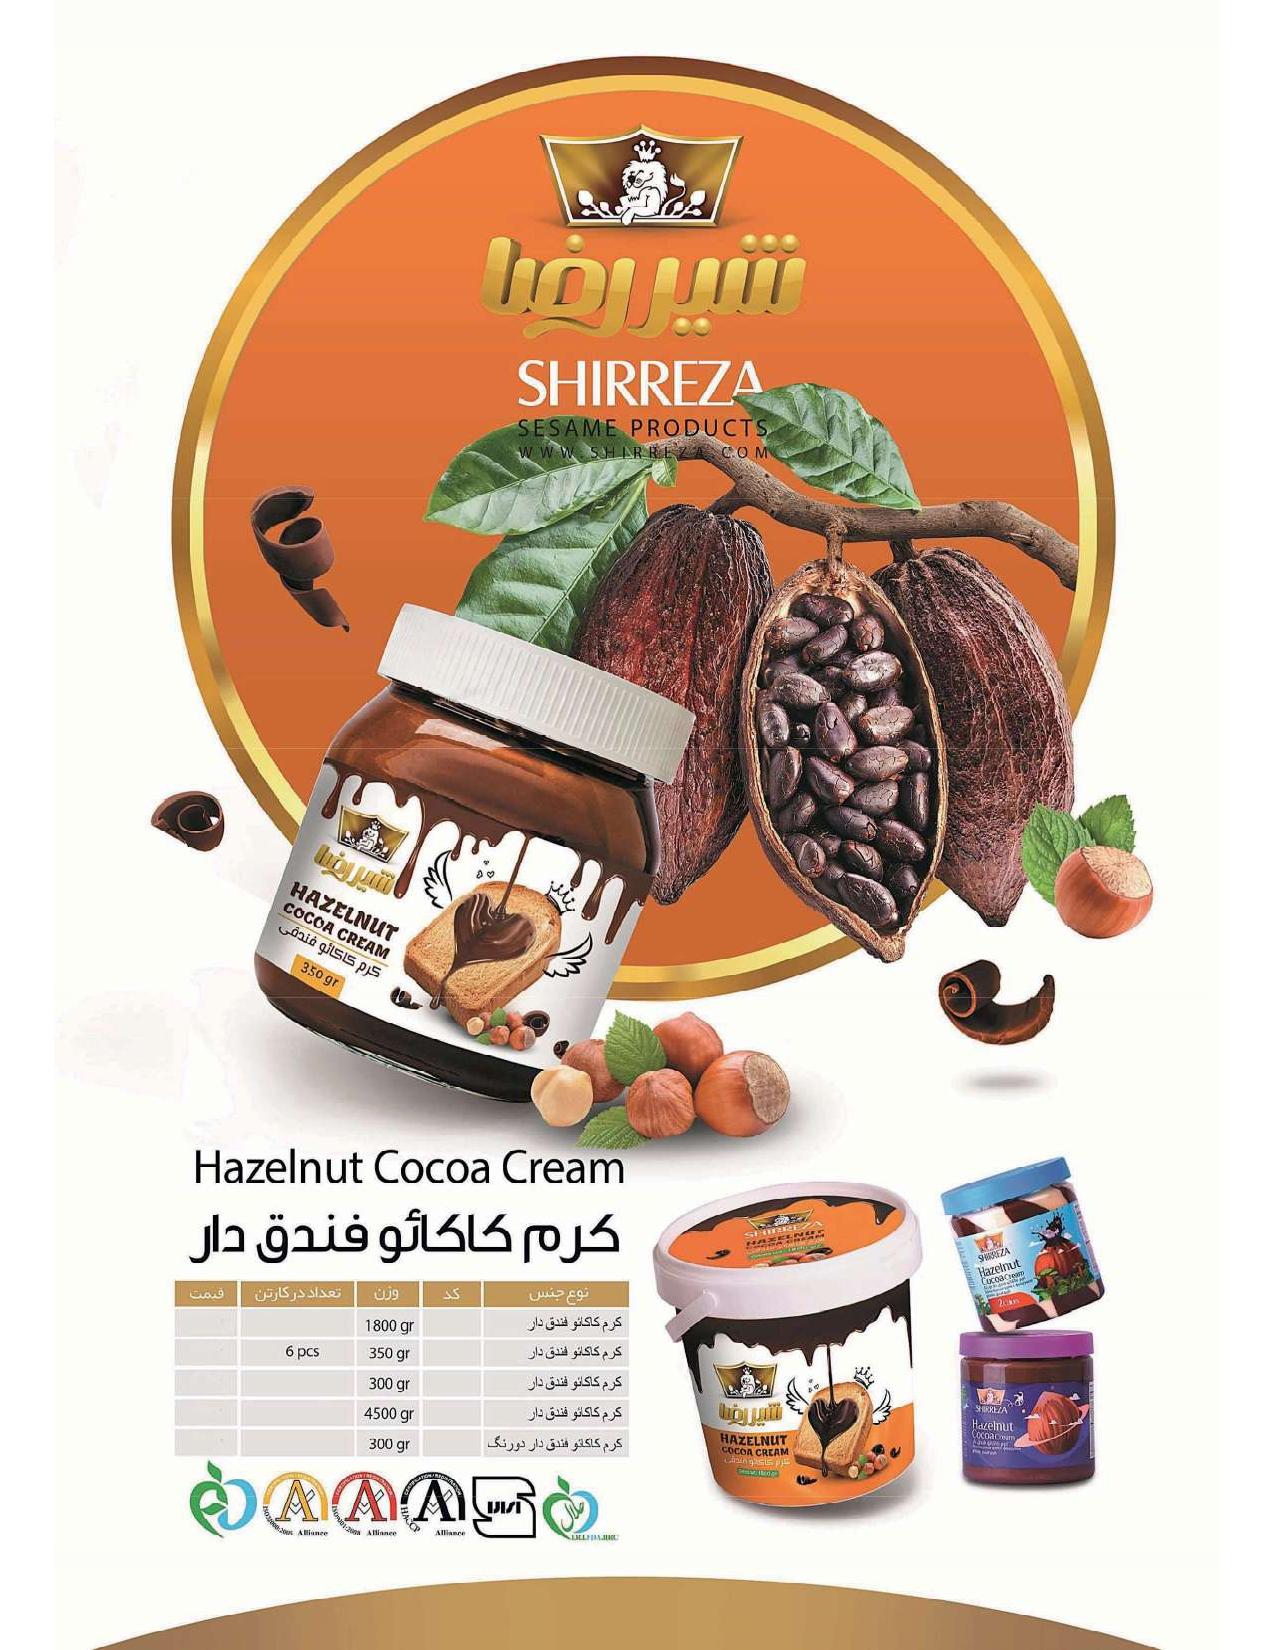 Hazelnut Cocoa Cream - Shirreza - ecplaza.net